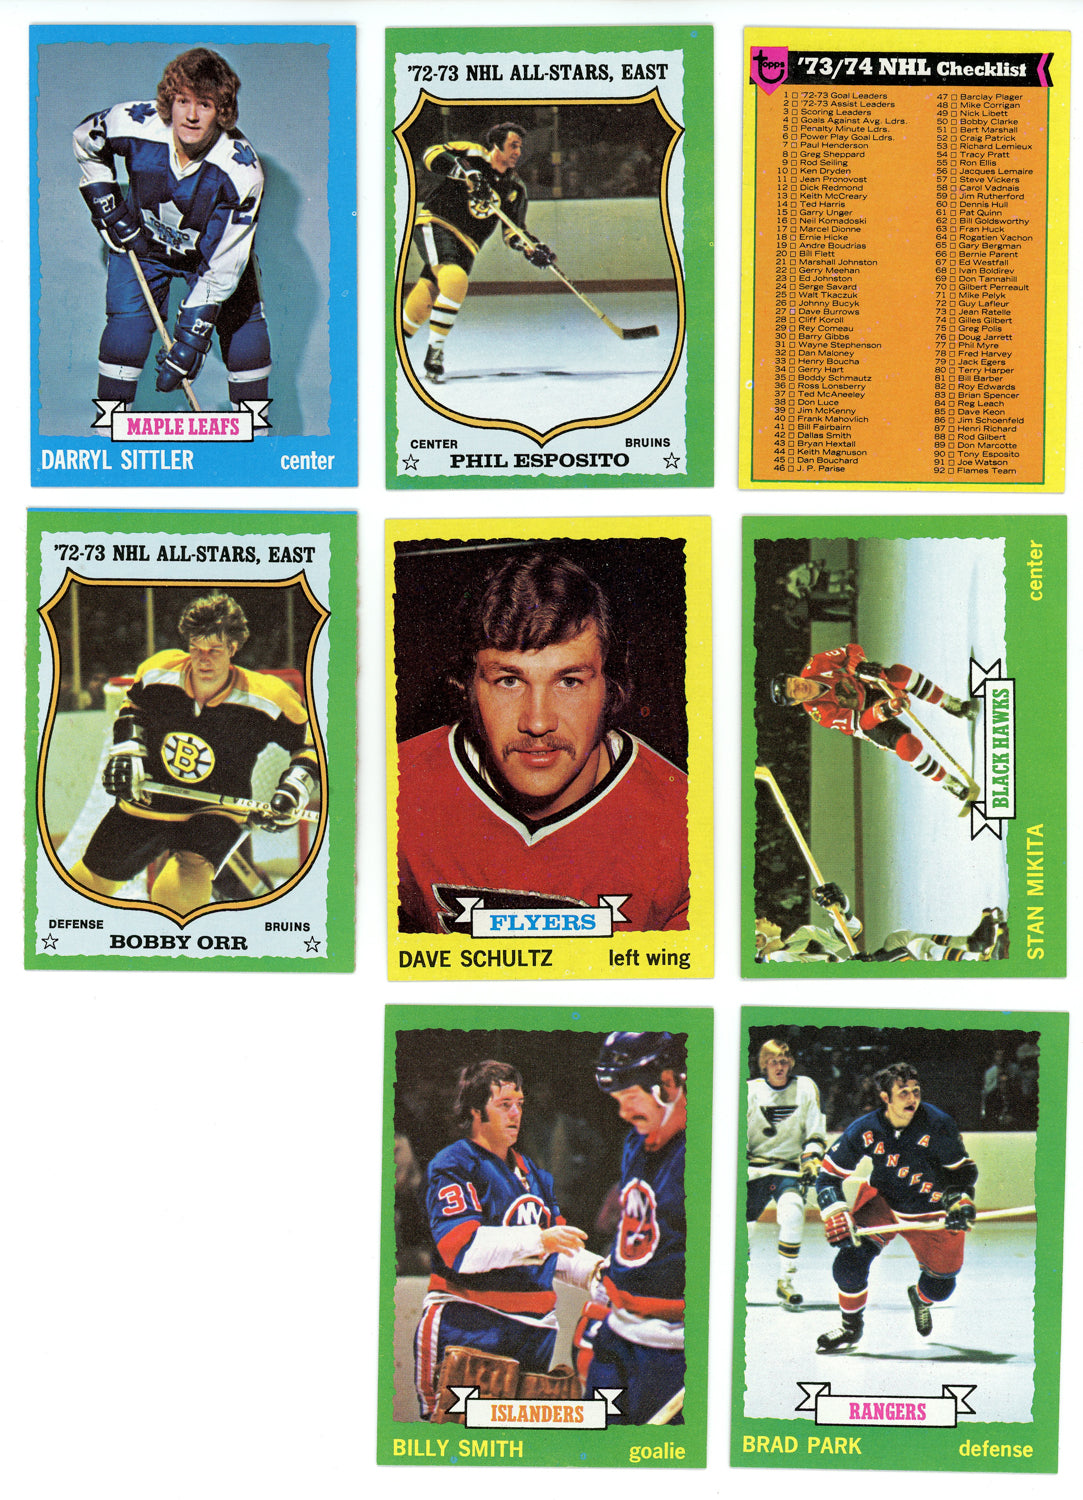 1977 Topps Regular (Hockey) Card# 55 Phil Esposito of the New York